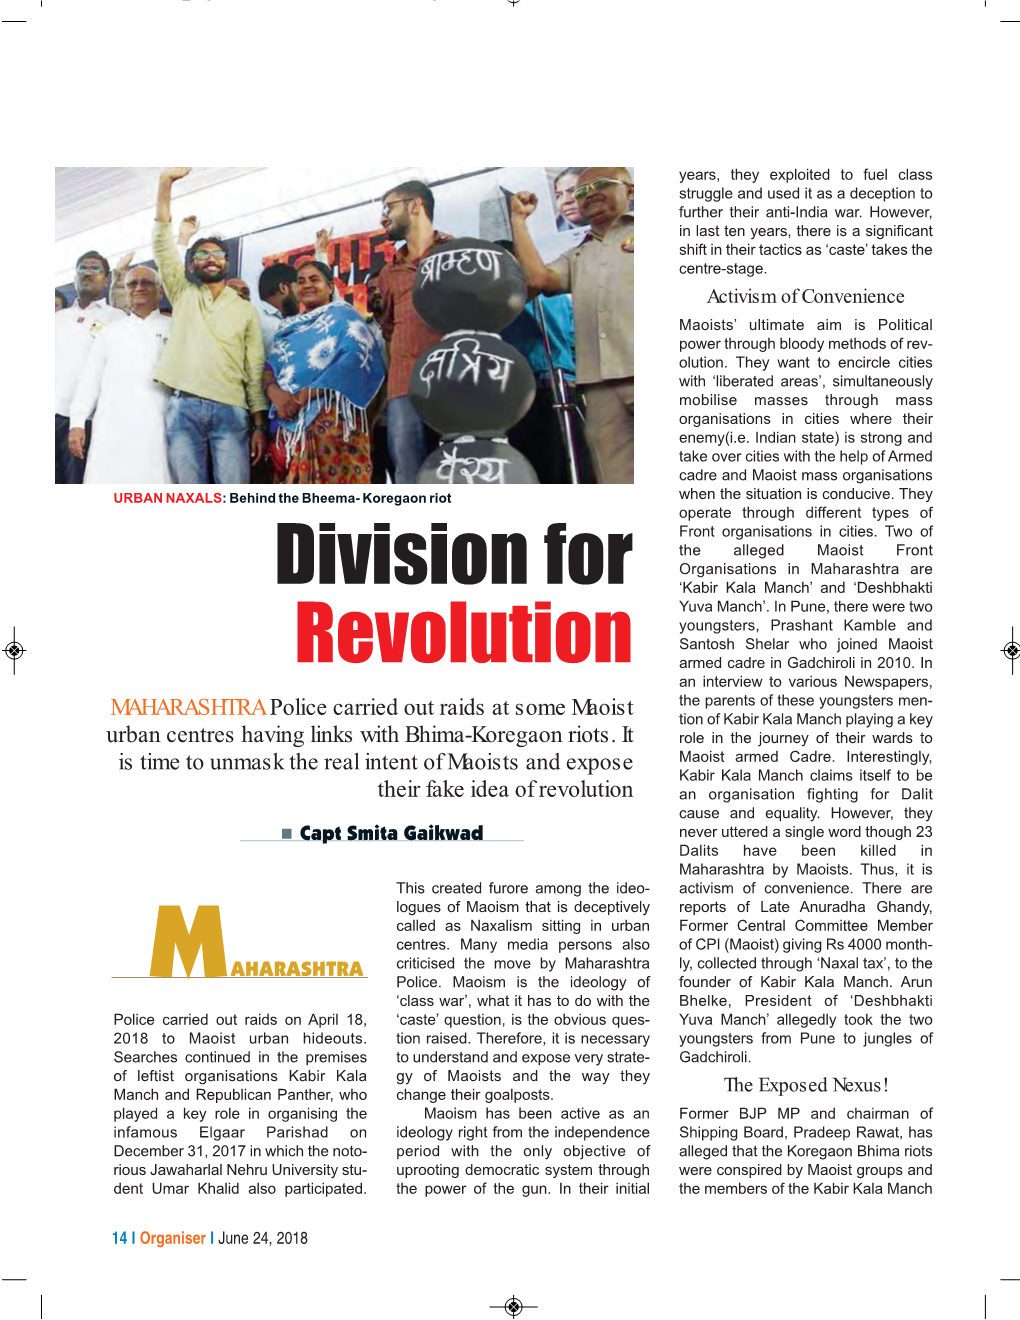 Division for Revolution Organisermks 6/14/2018 8:03 PM Page 1